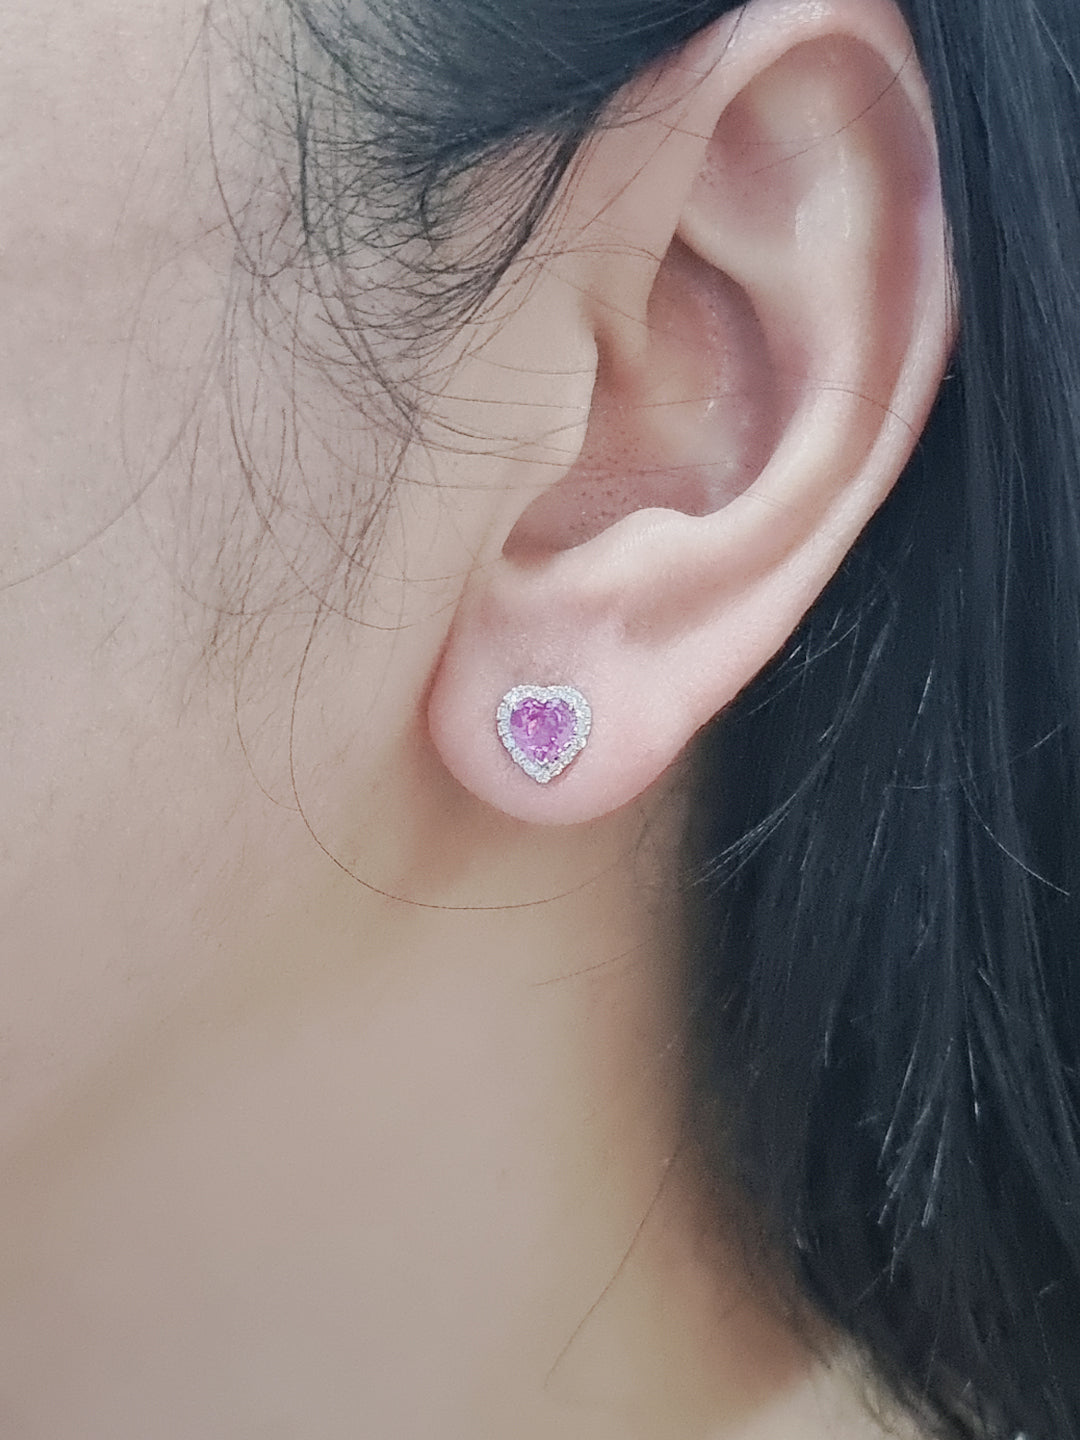 Heart Shape Pink Sapphire With Diamond Halo Stud Earrings In 18k White Gold.